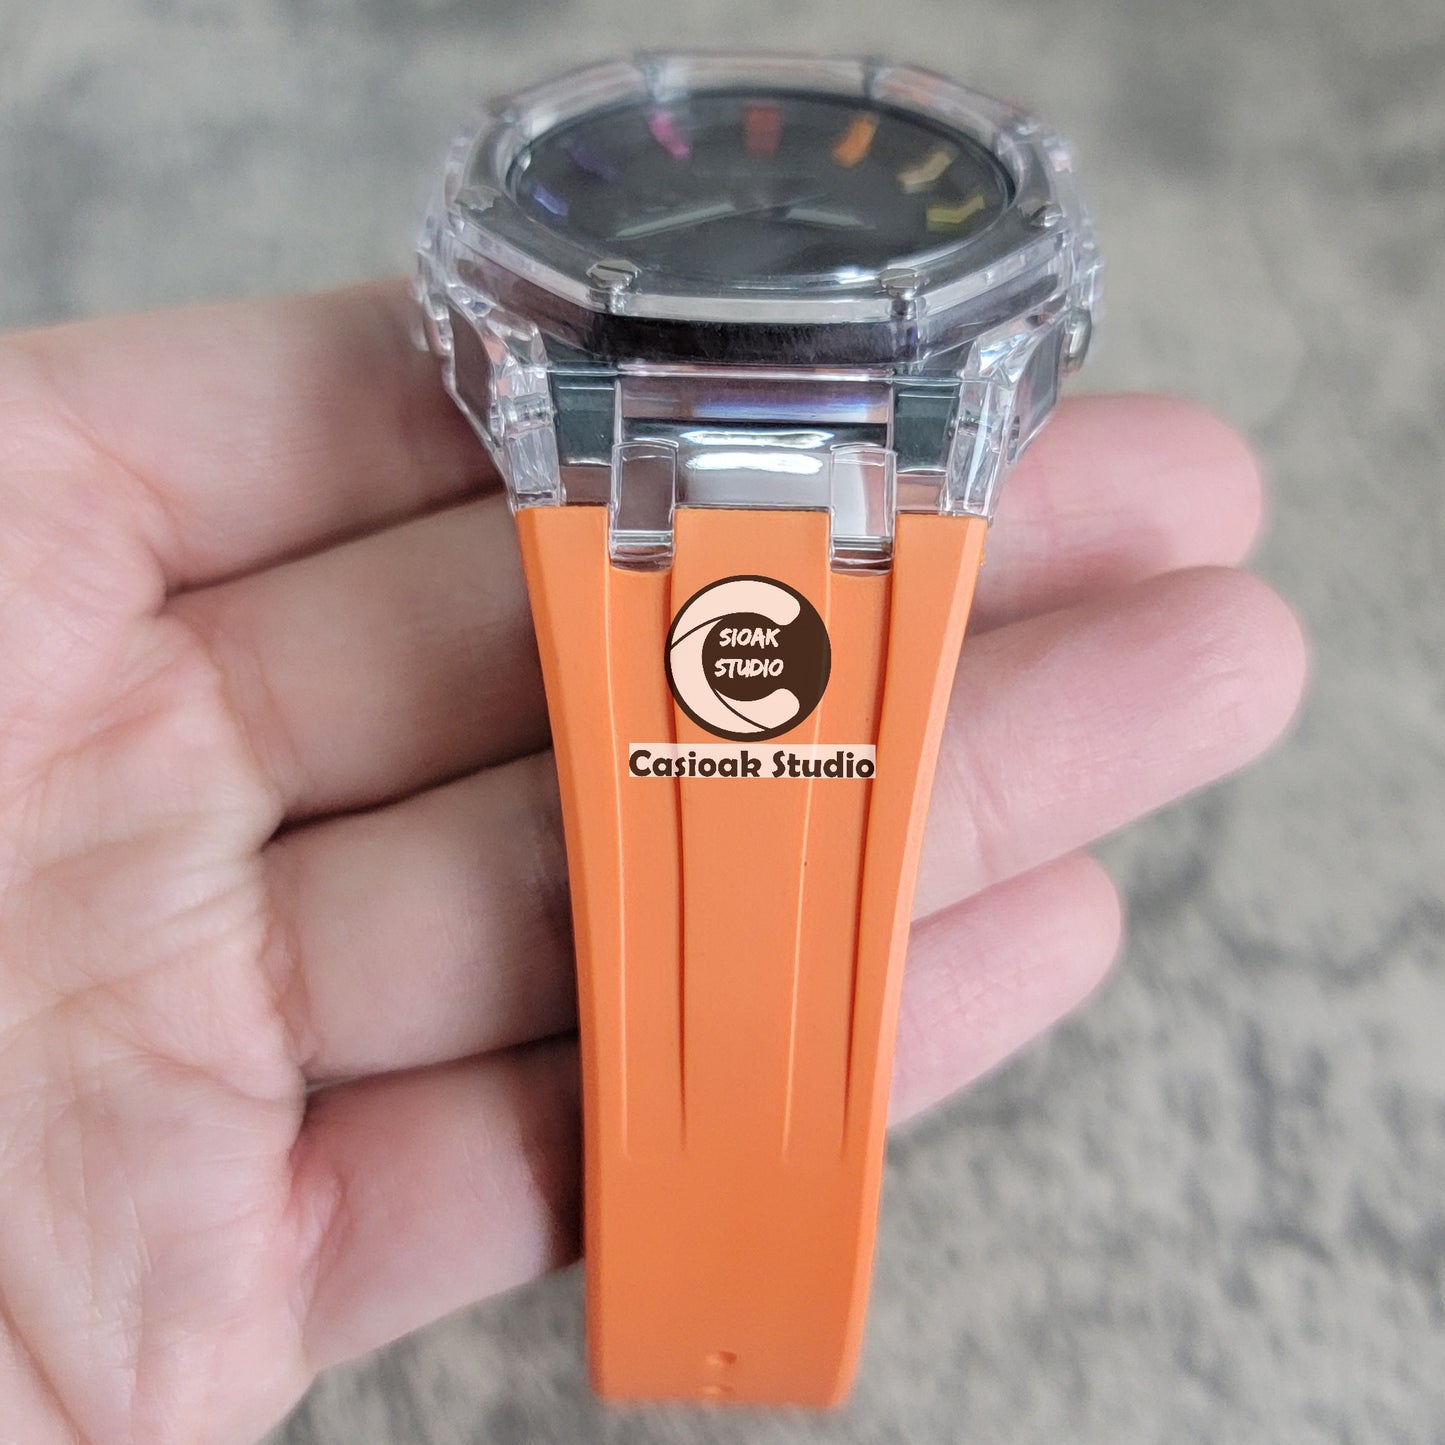 Casioak Mod Watch Transparent Case Orange Strap Black Rainbow Time Mark Black Dial 44mm - Casioak Studio